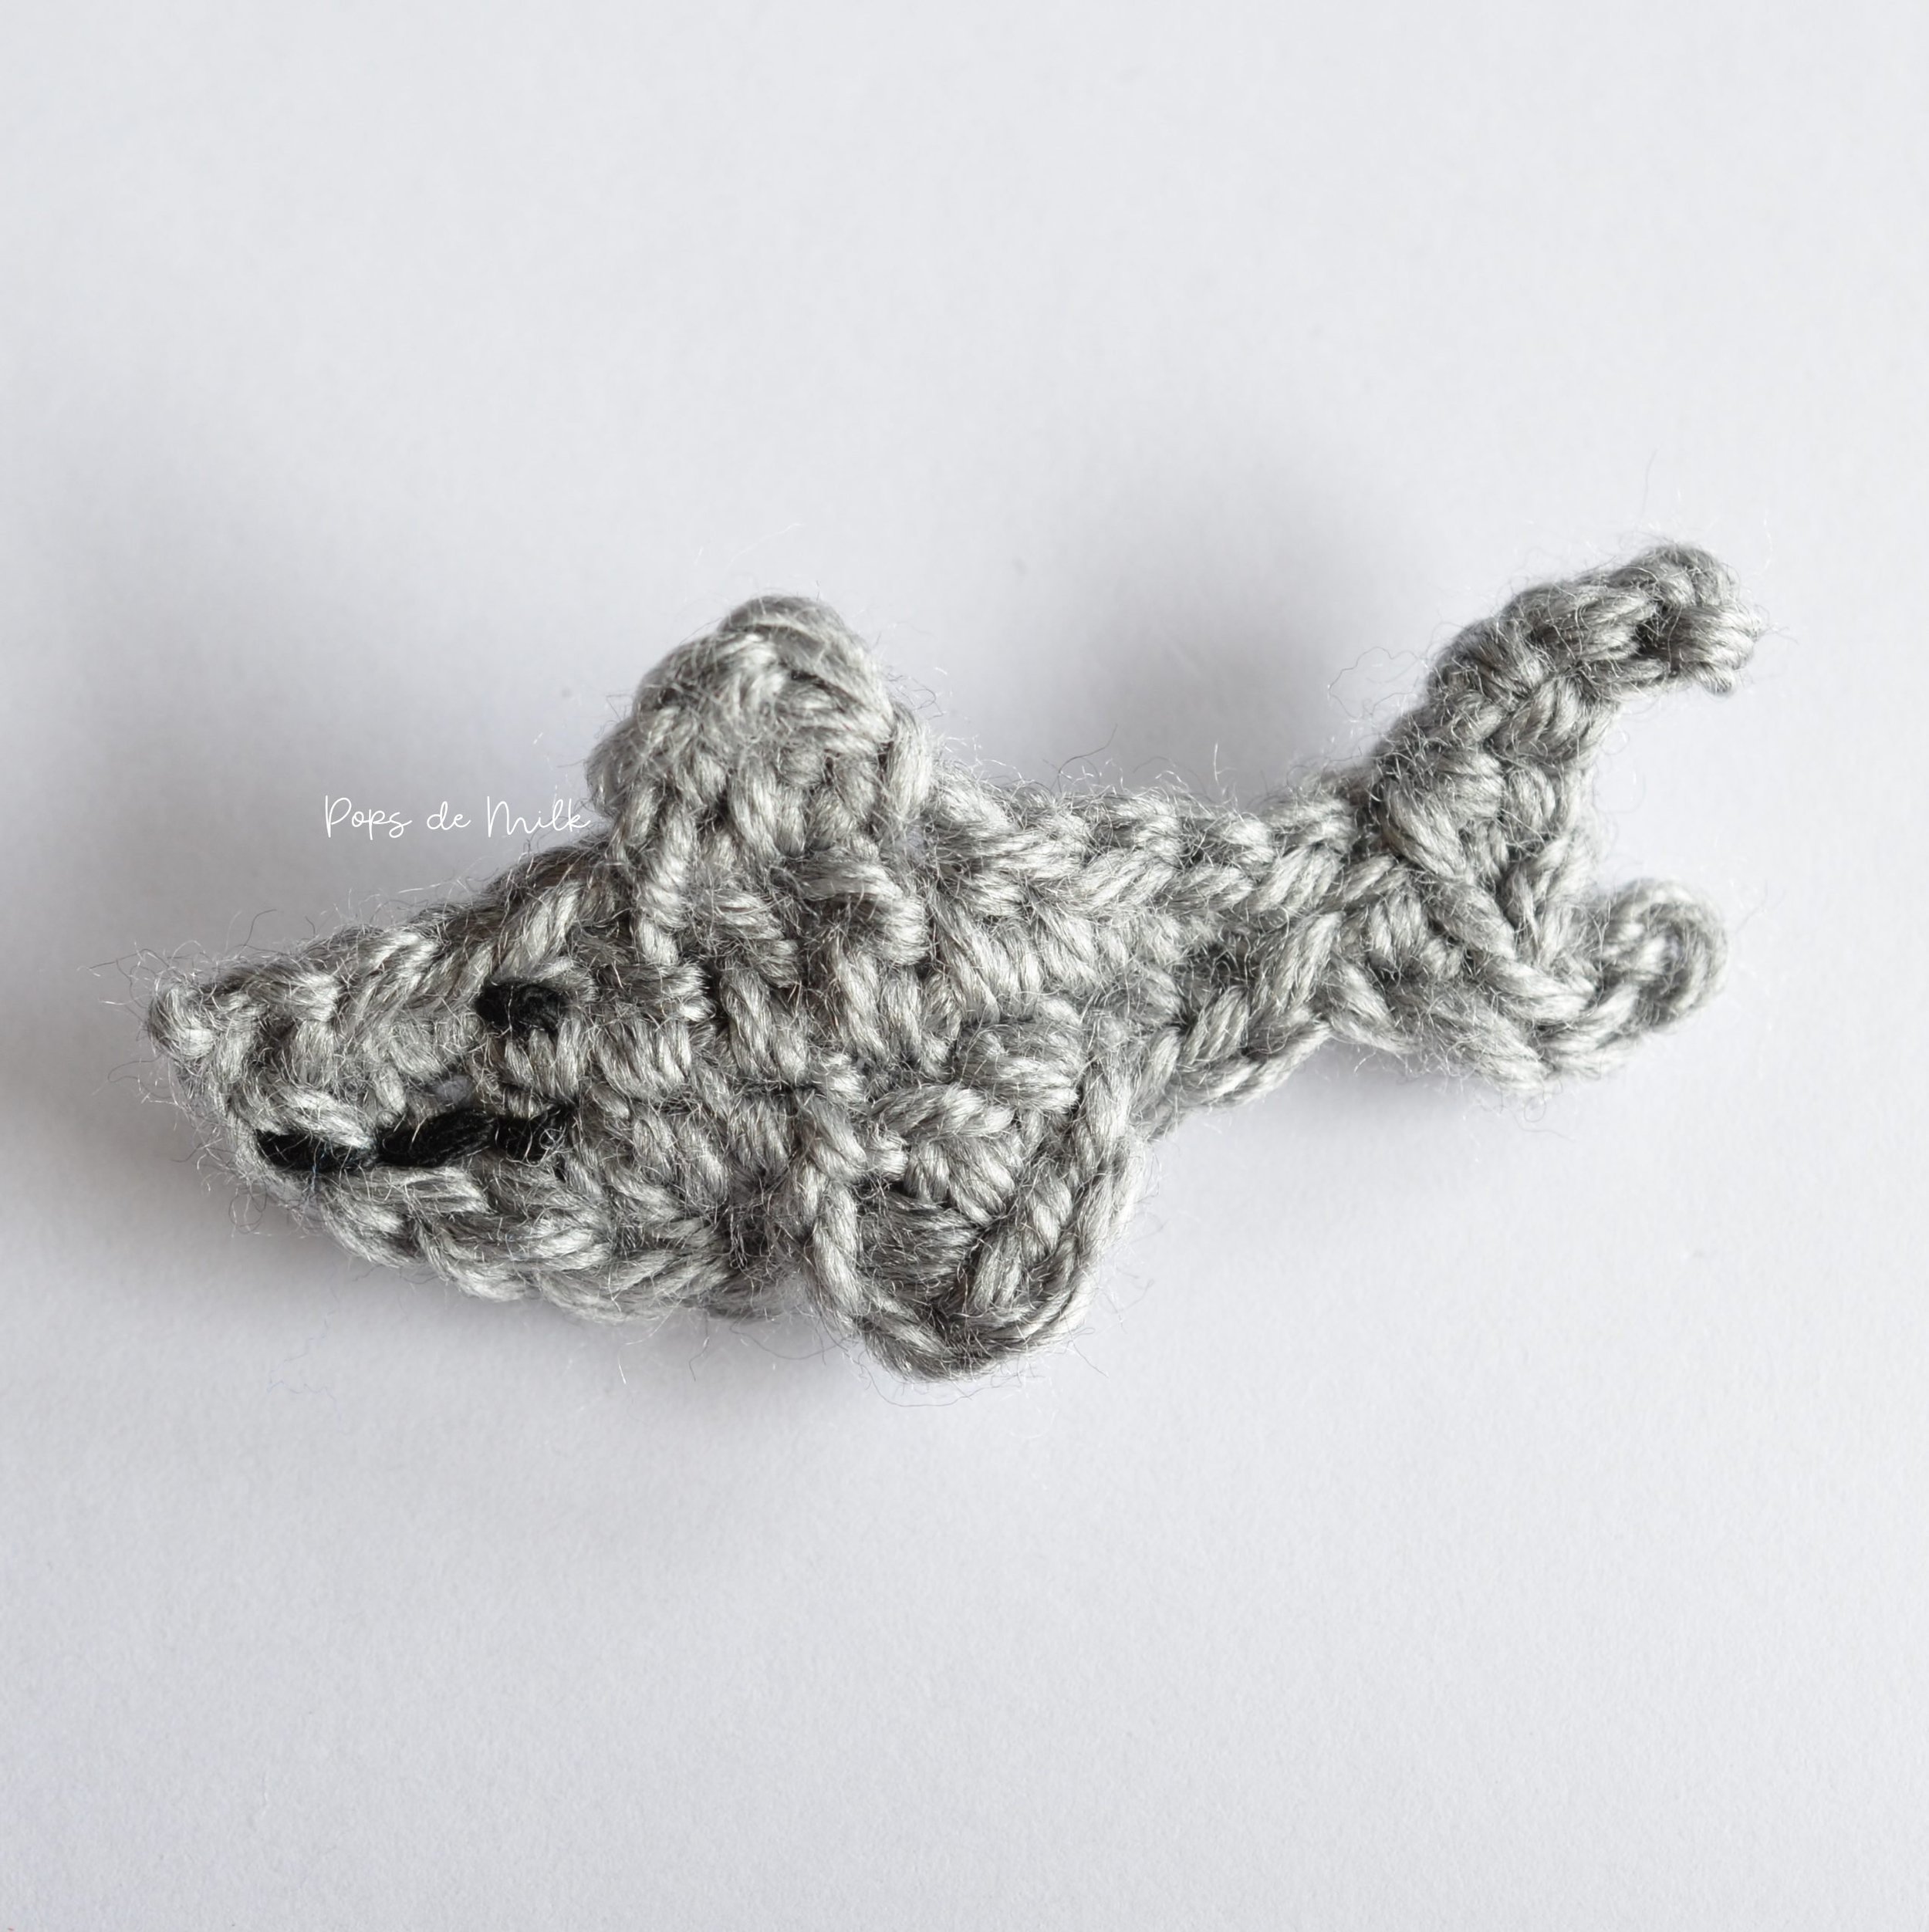 Pin on Crochet patterns/ideas